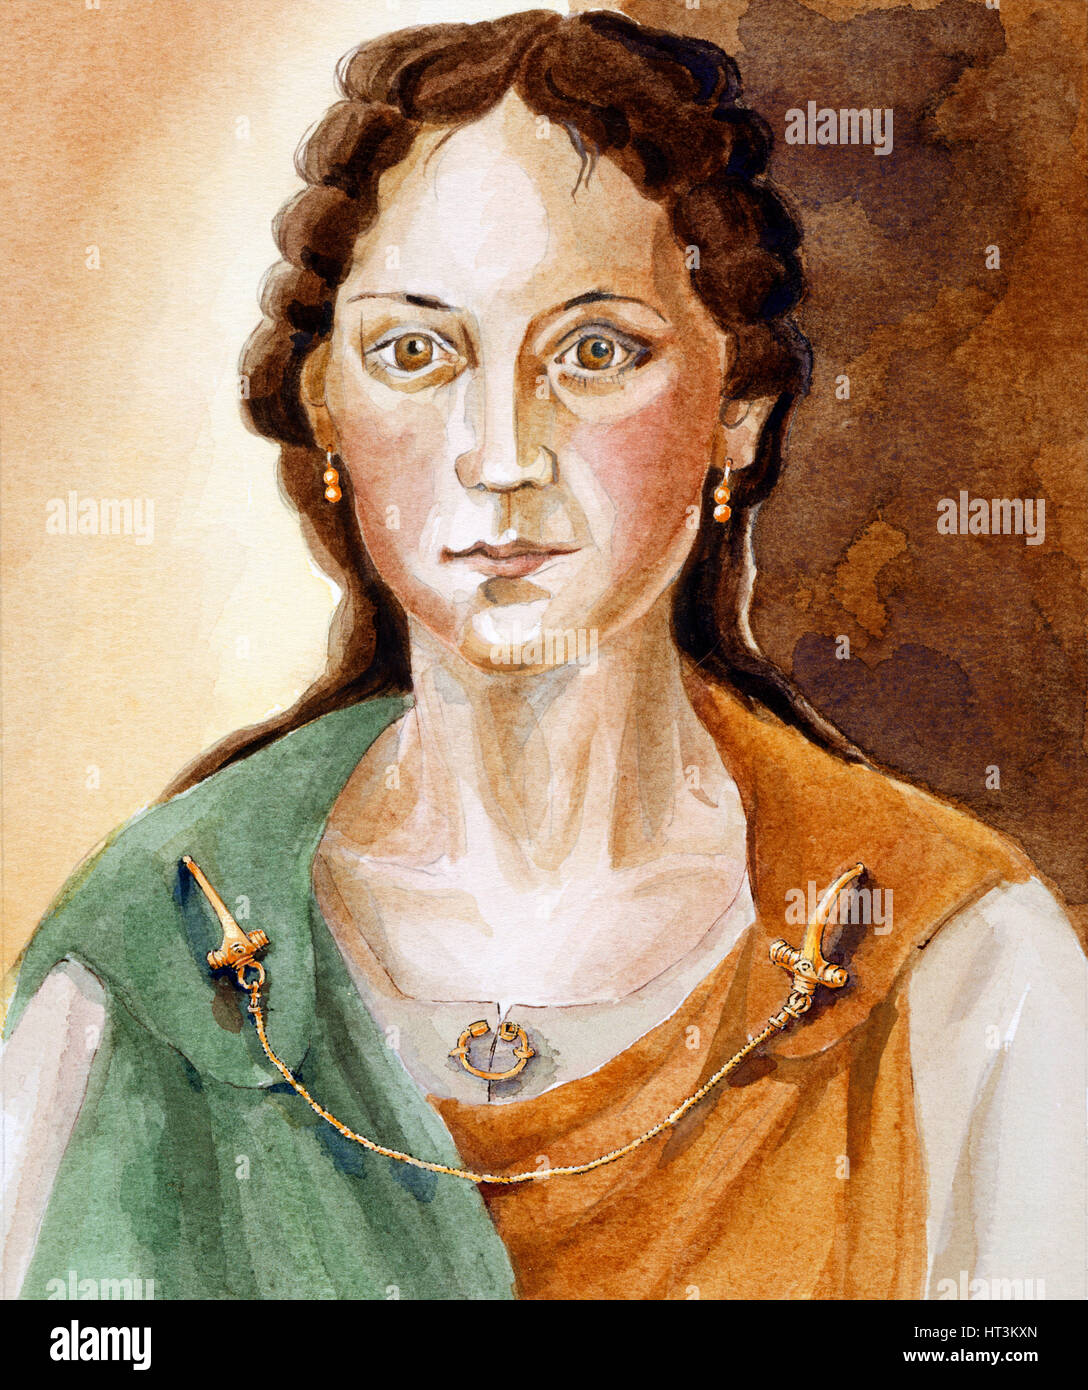 Roman woman, late 2nd century, (c1990-2010). Artist: Judith Dobie. Stock Photo